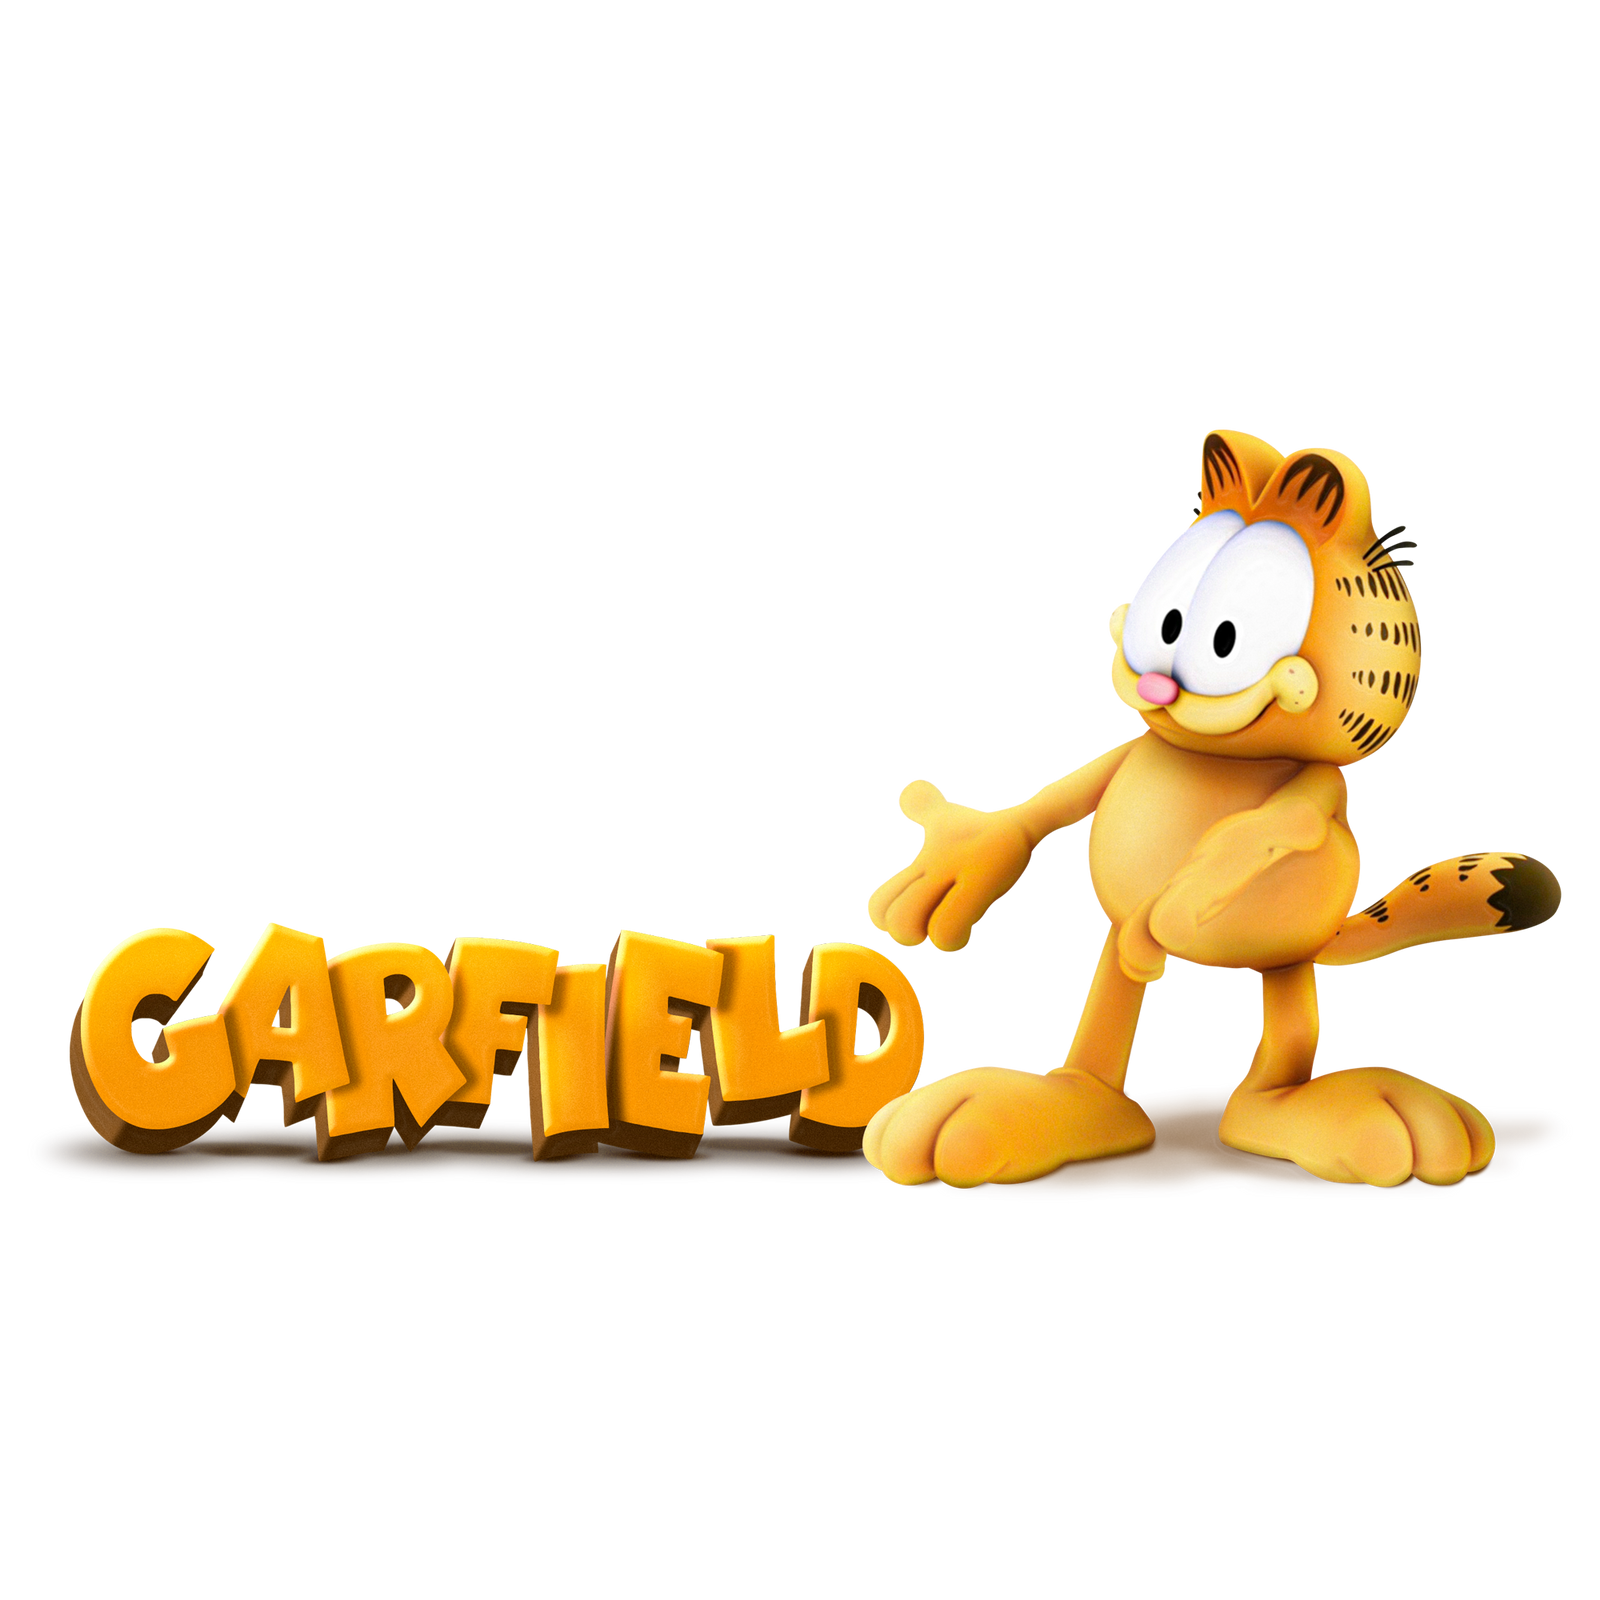 Garfield logo.